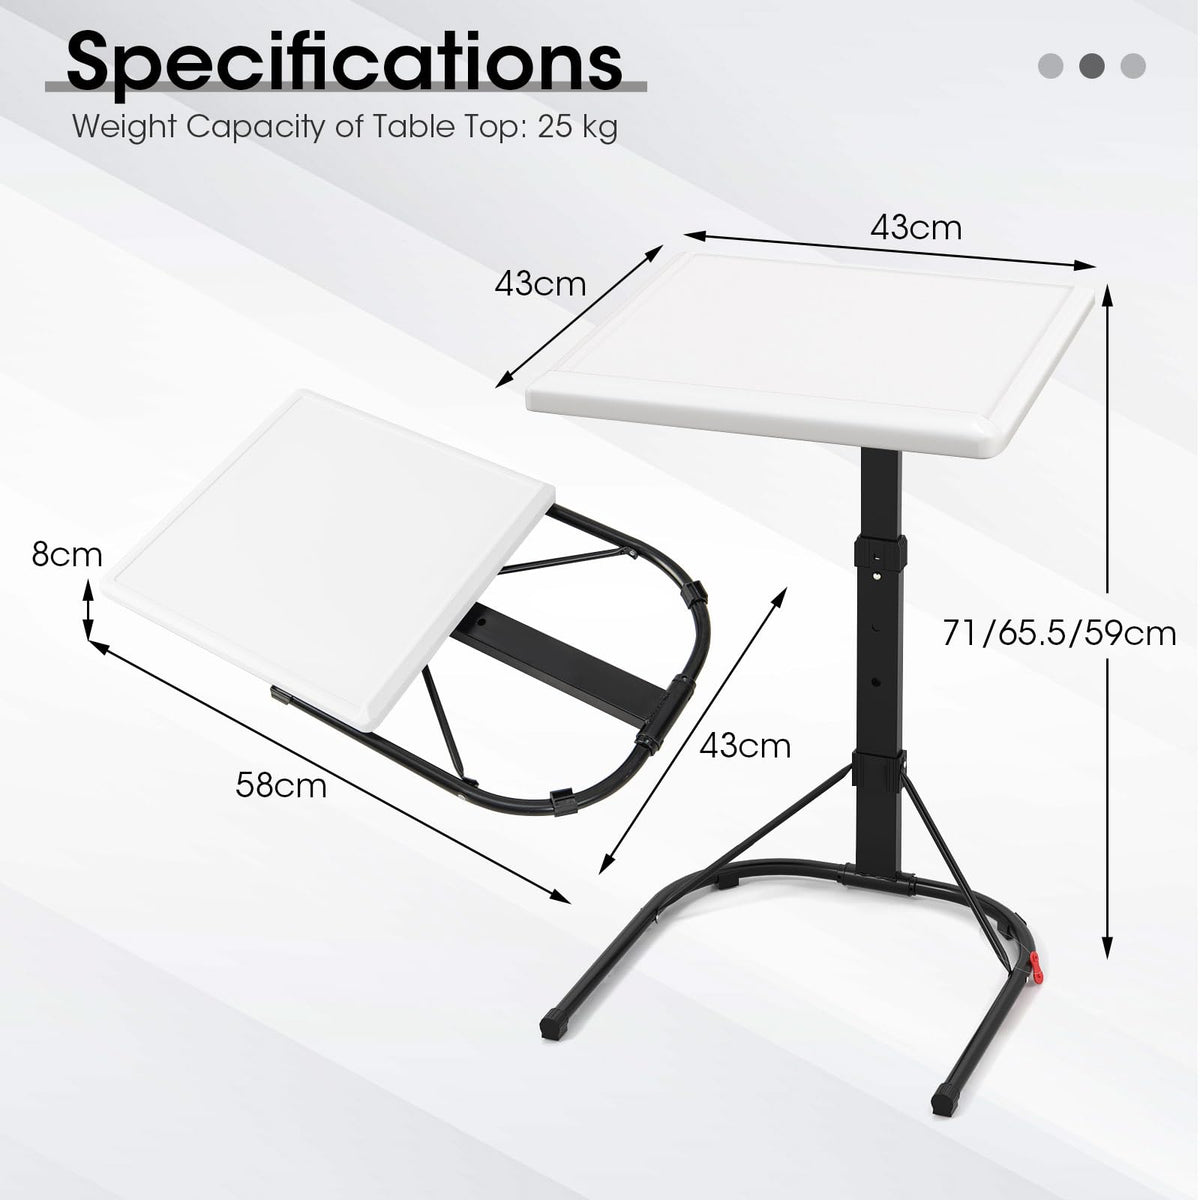 Giantex Height Adjustable C-shaped Laptop Desk